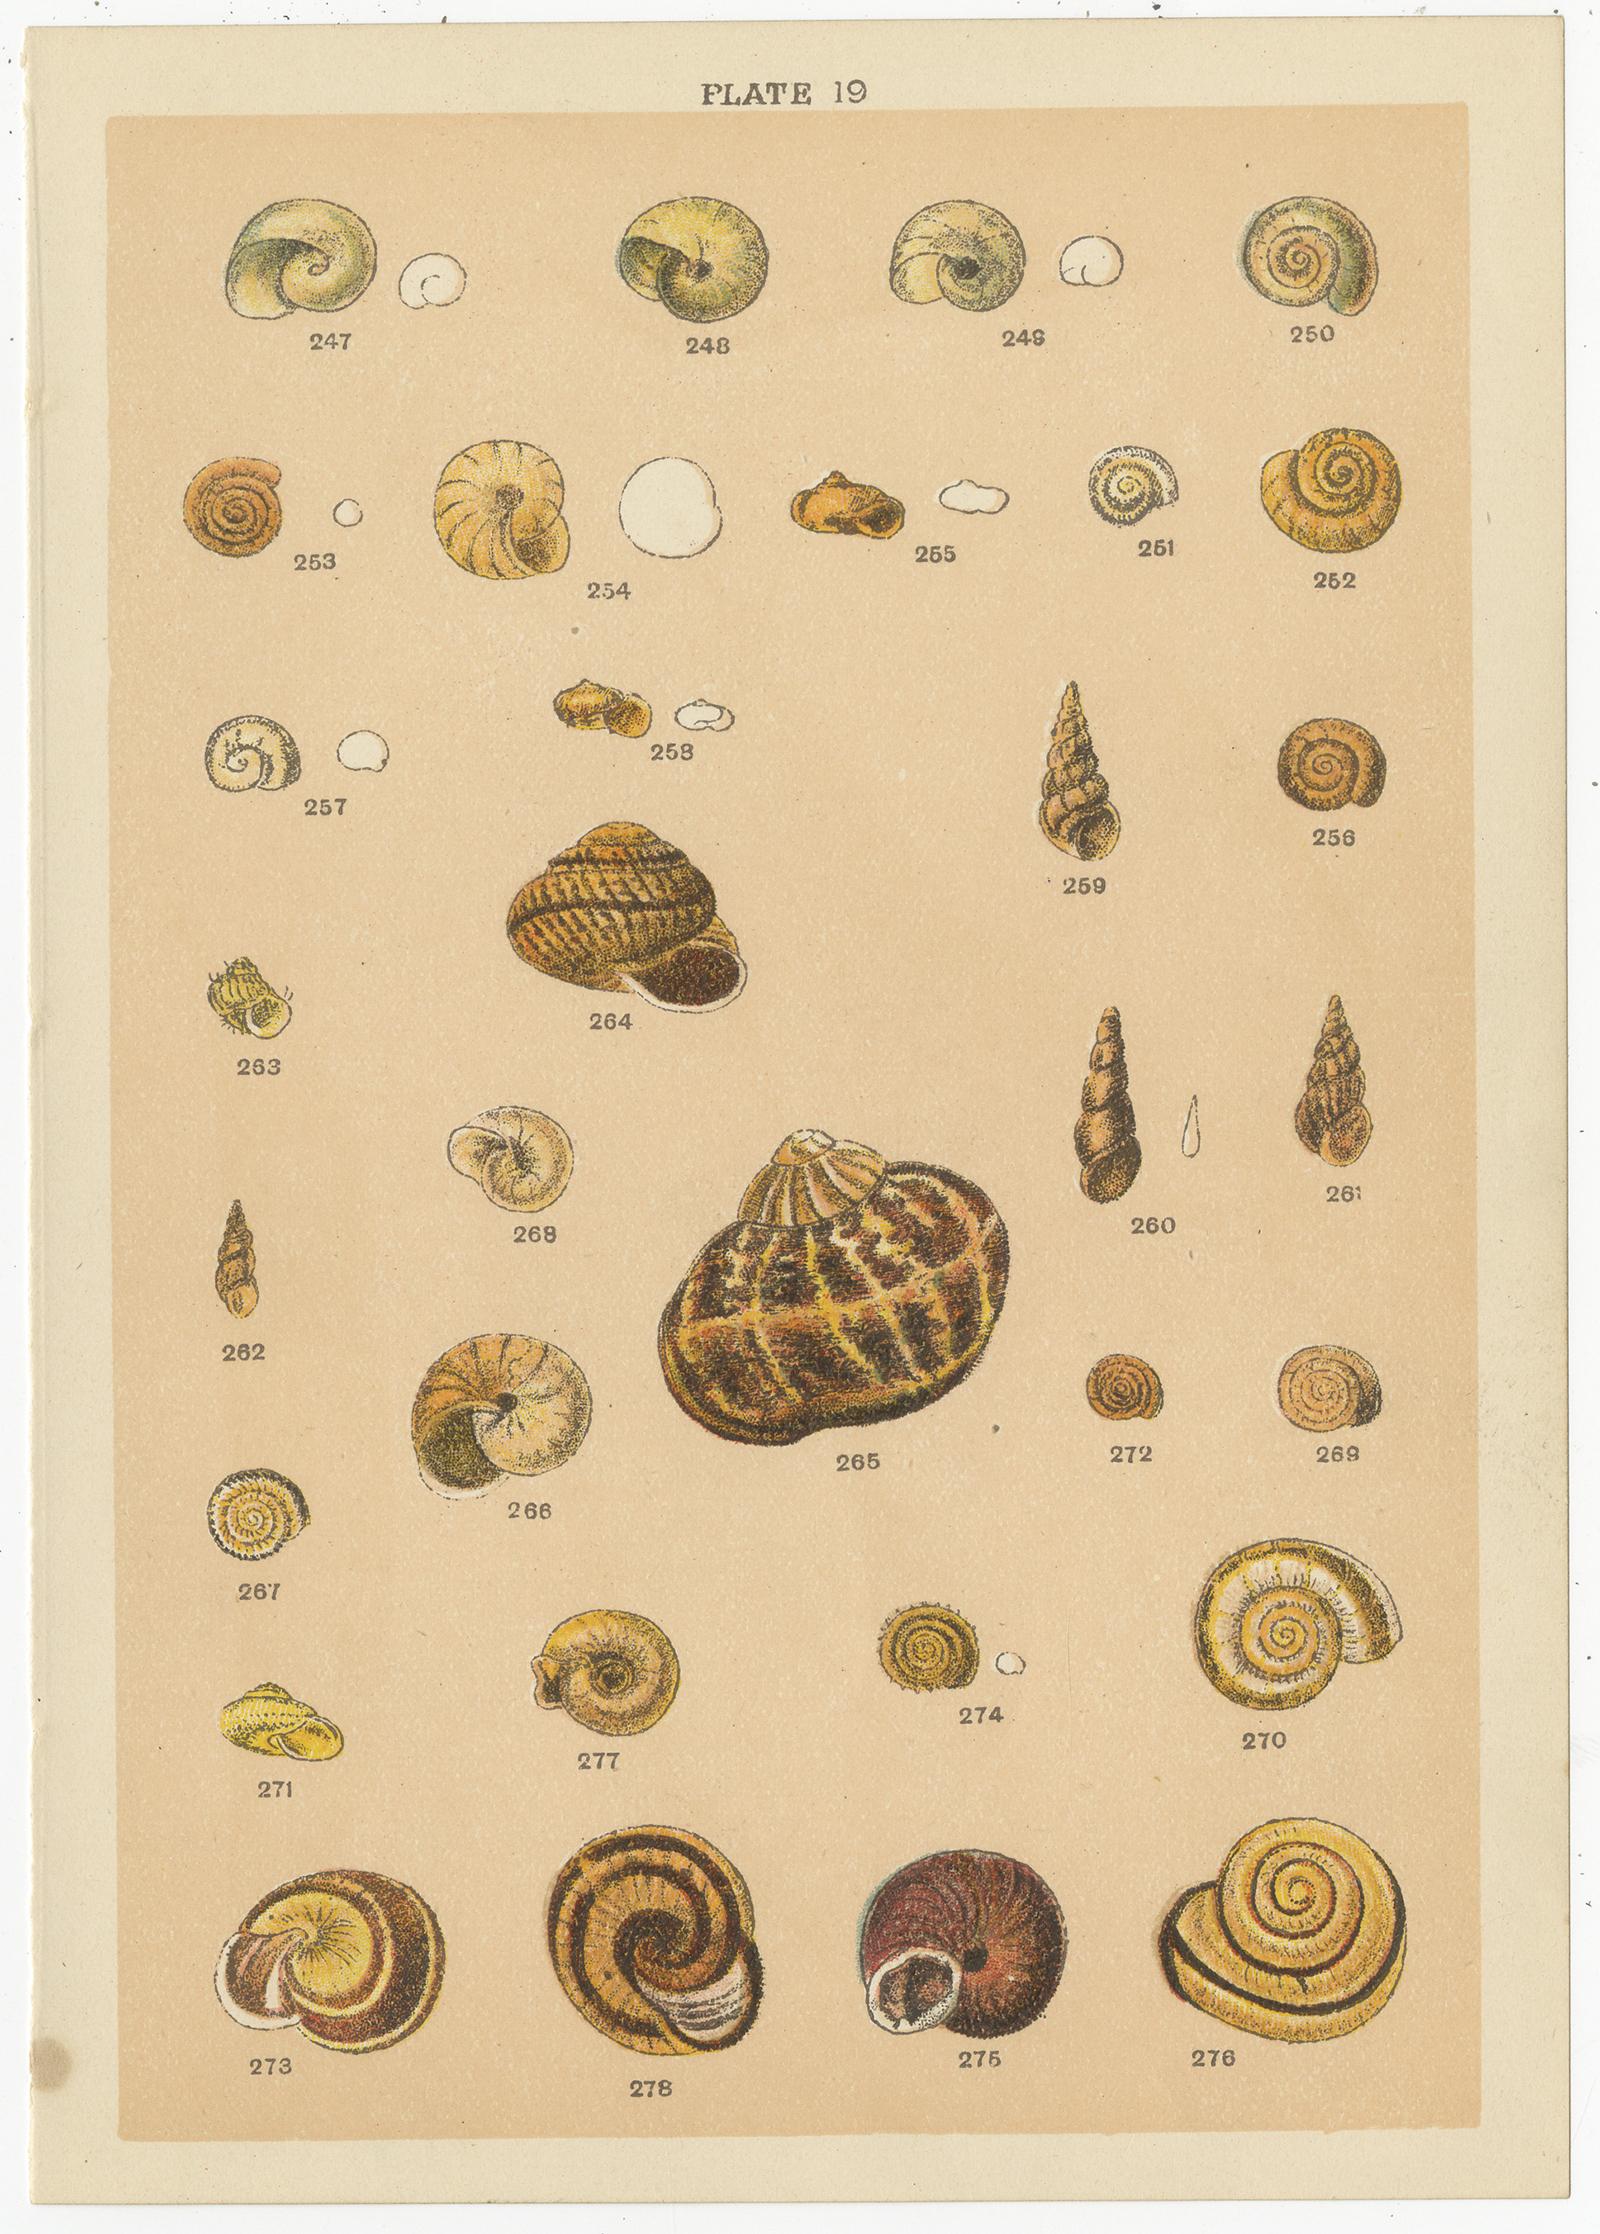 20th Century Set of 10 Antique Prints of Shells Including Razor Shells by Gordon 'circa 1900'